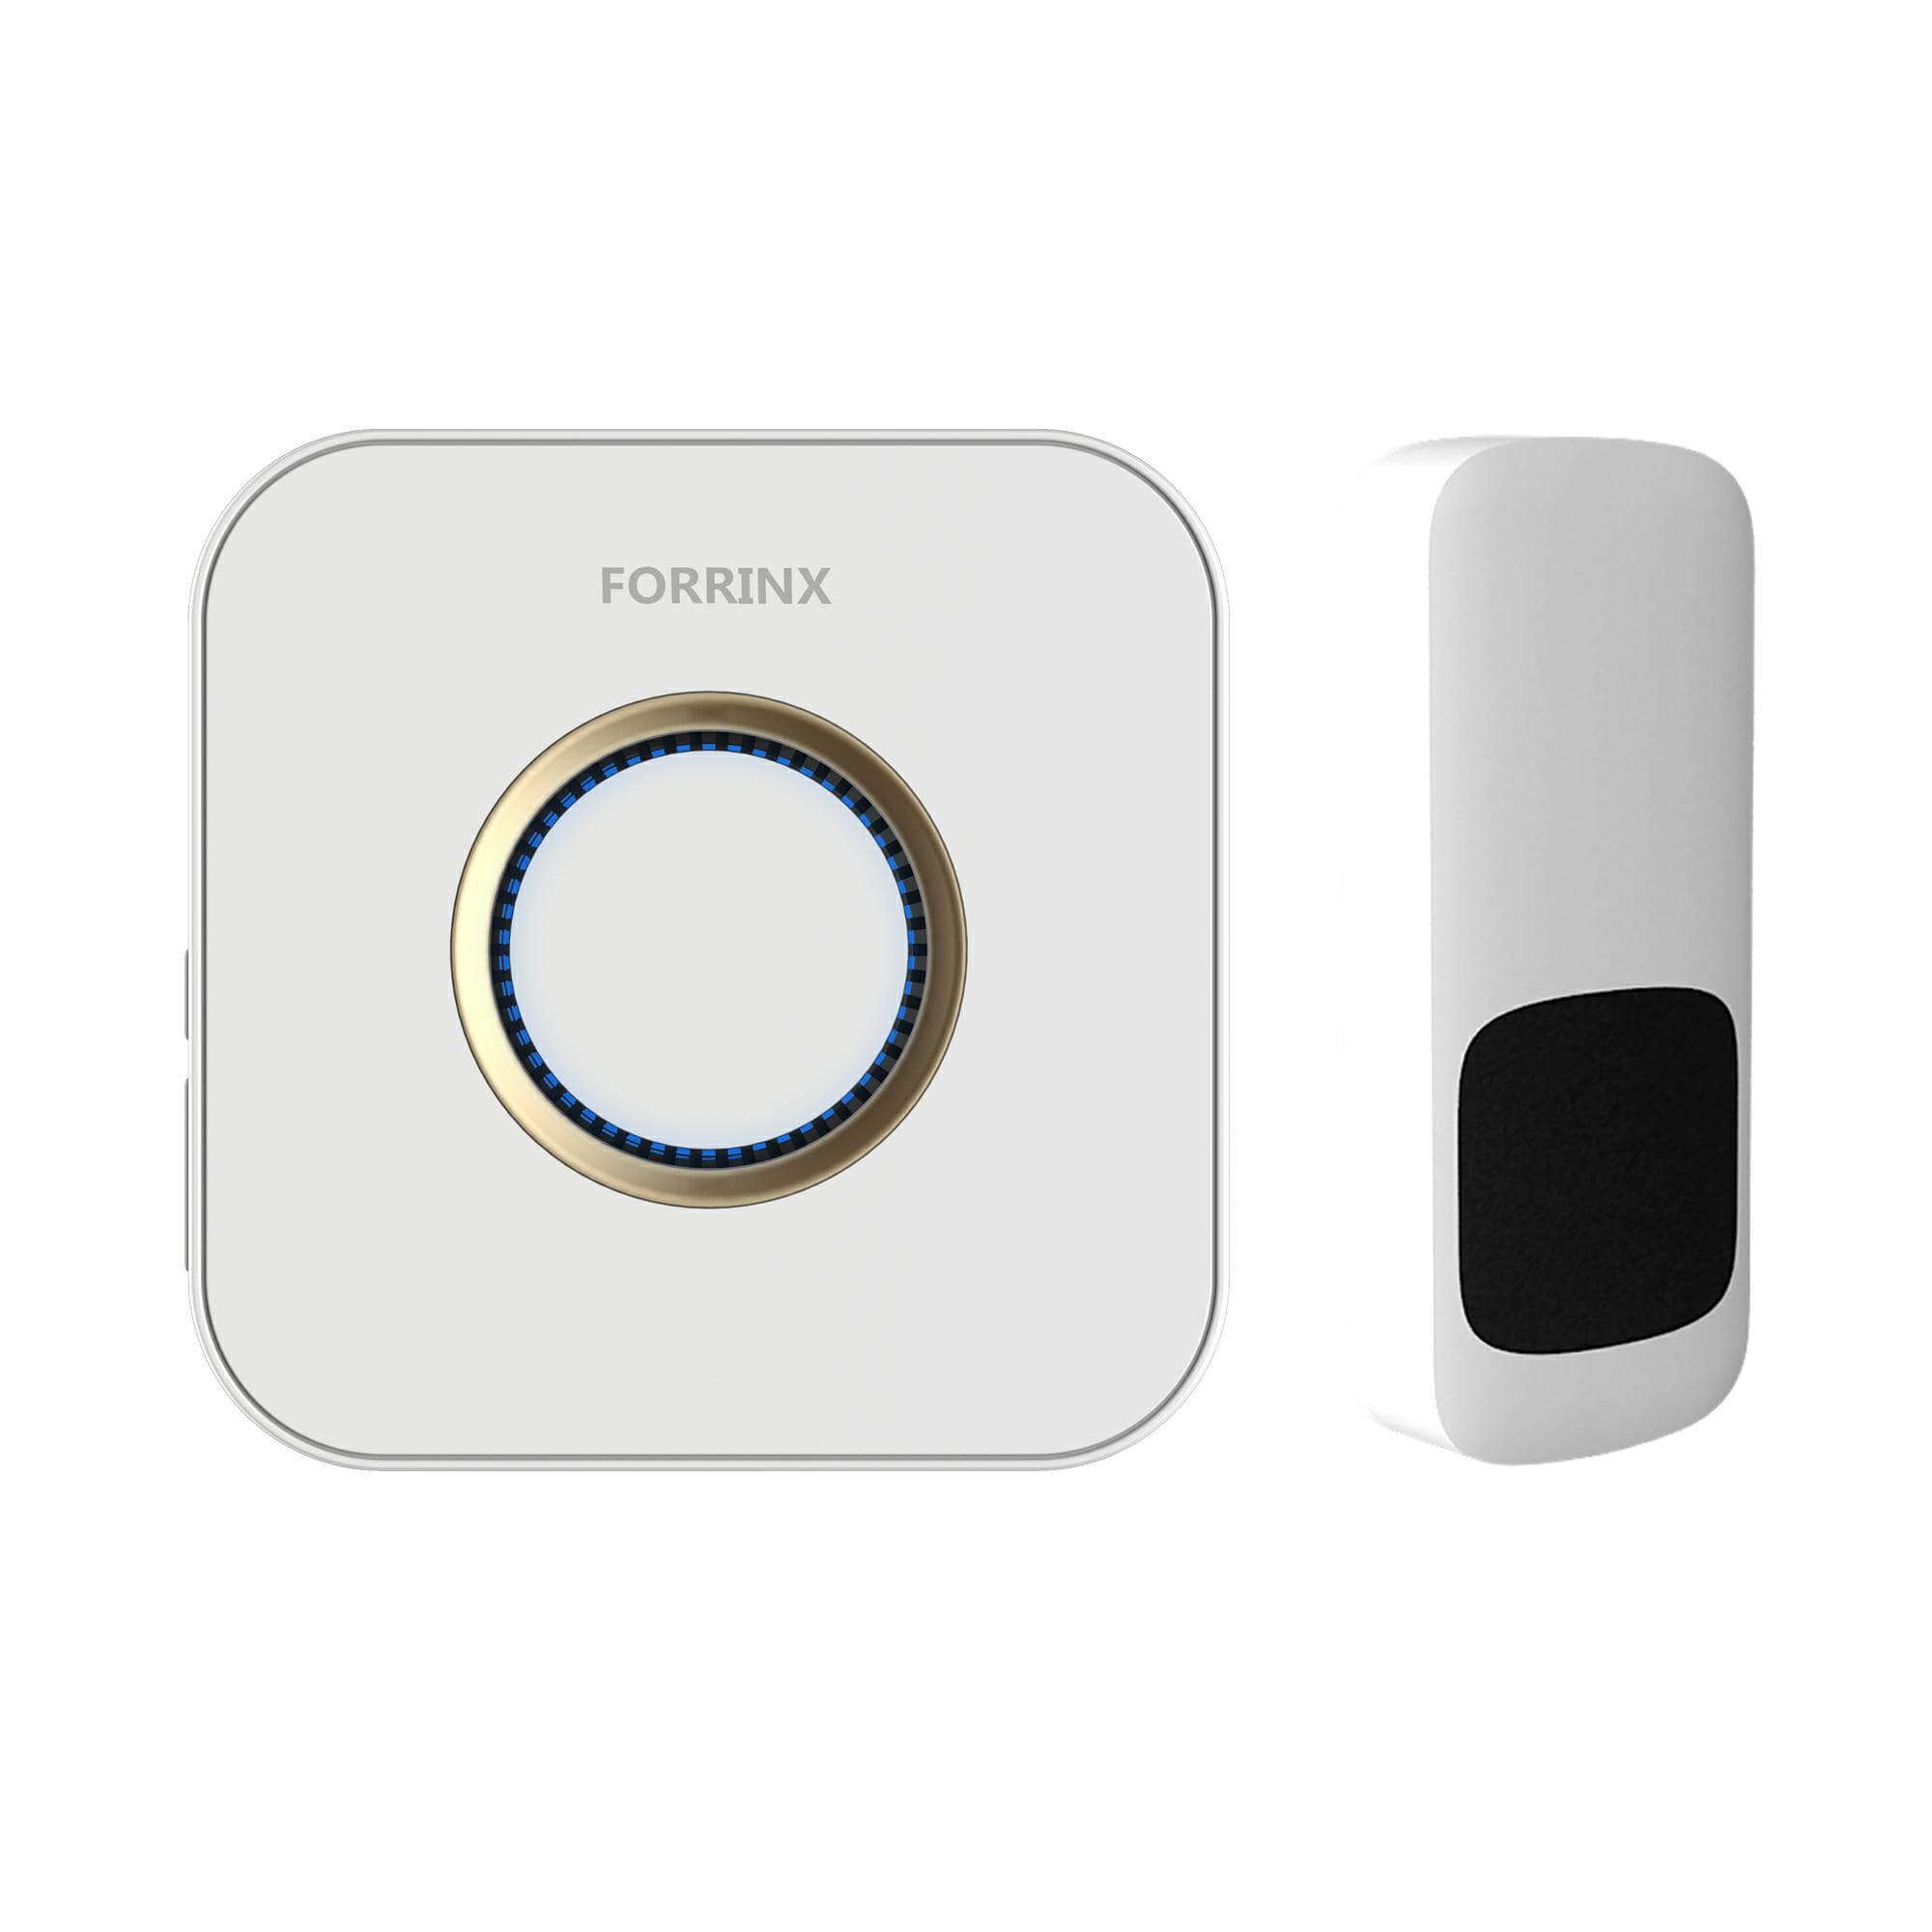 Forrinx wireless doorbell up to 300m operating range